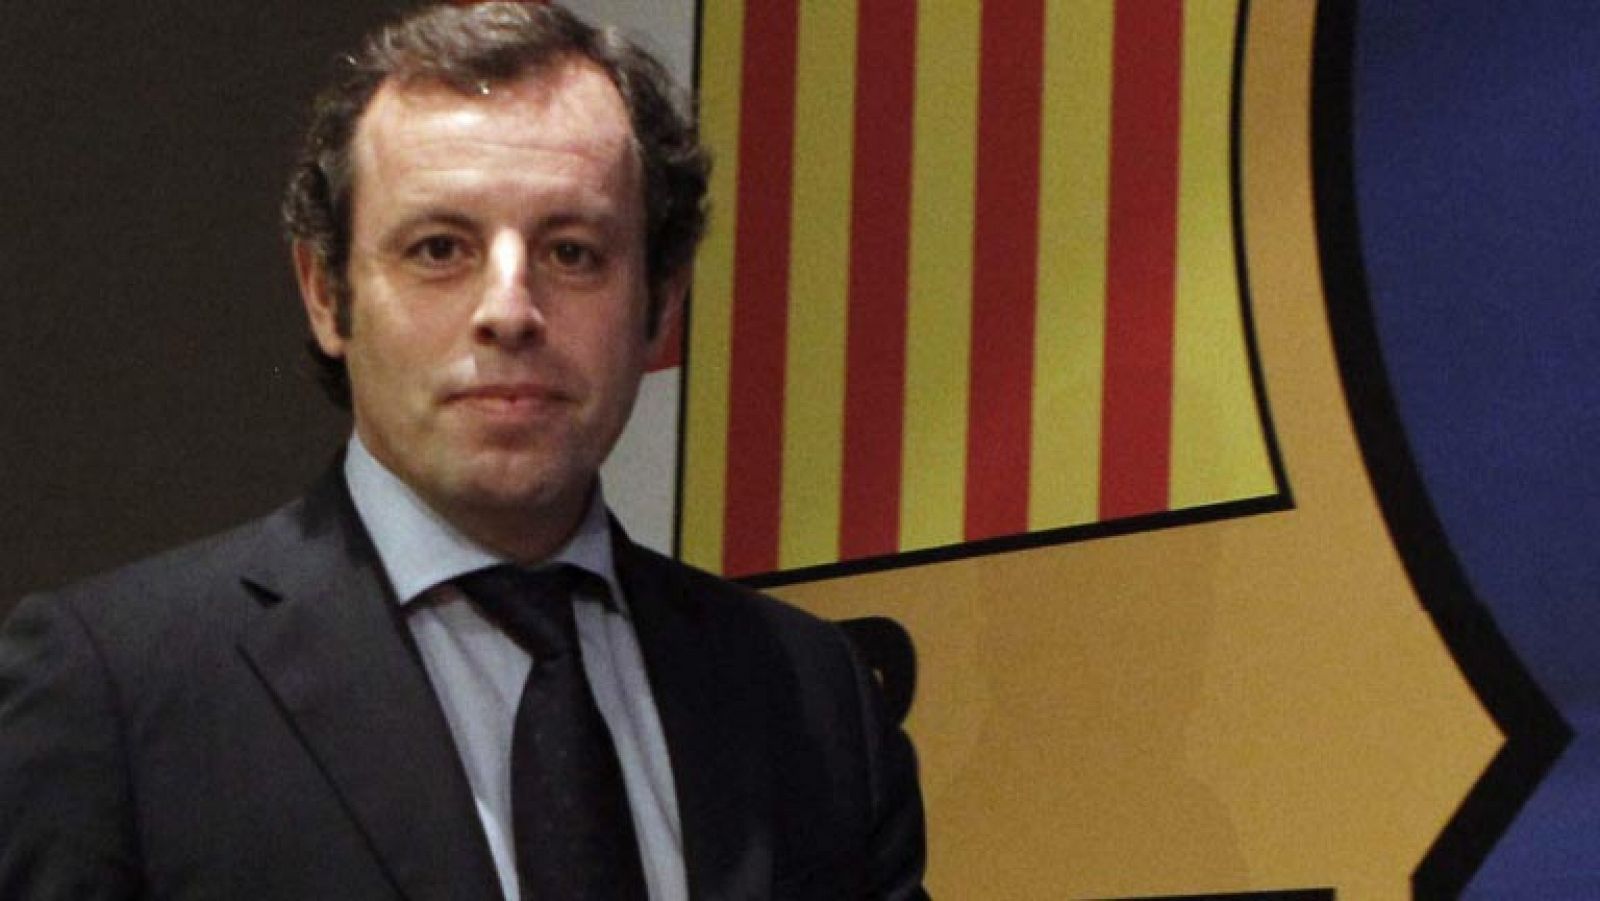 Telediario 1: Hablar catalán es sentir el Barça, según Rosell | RTVE Play